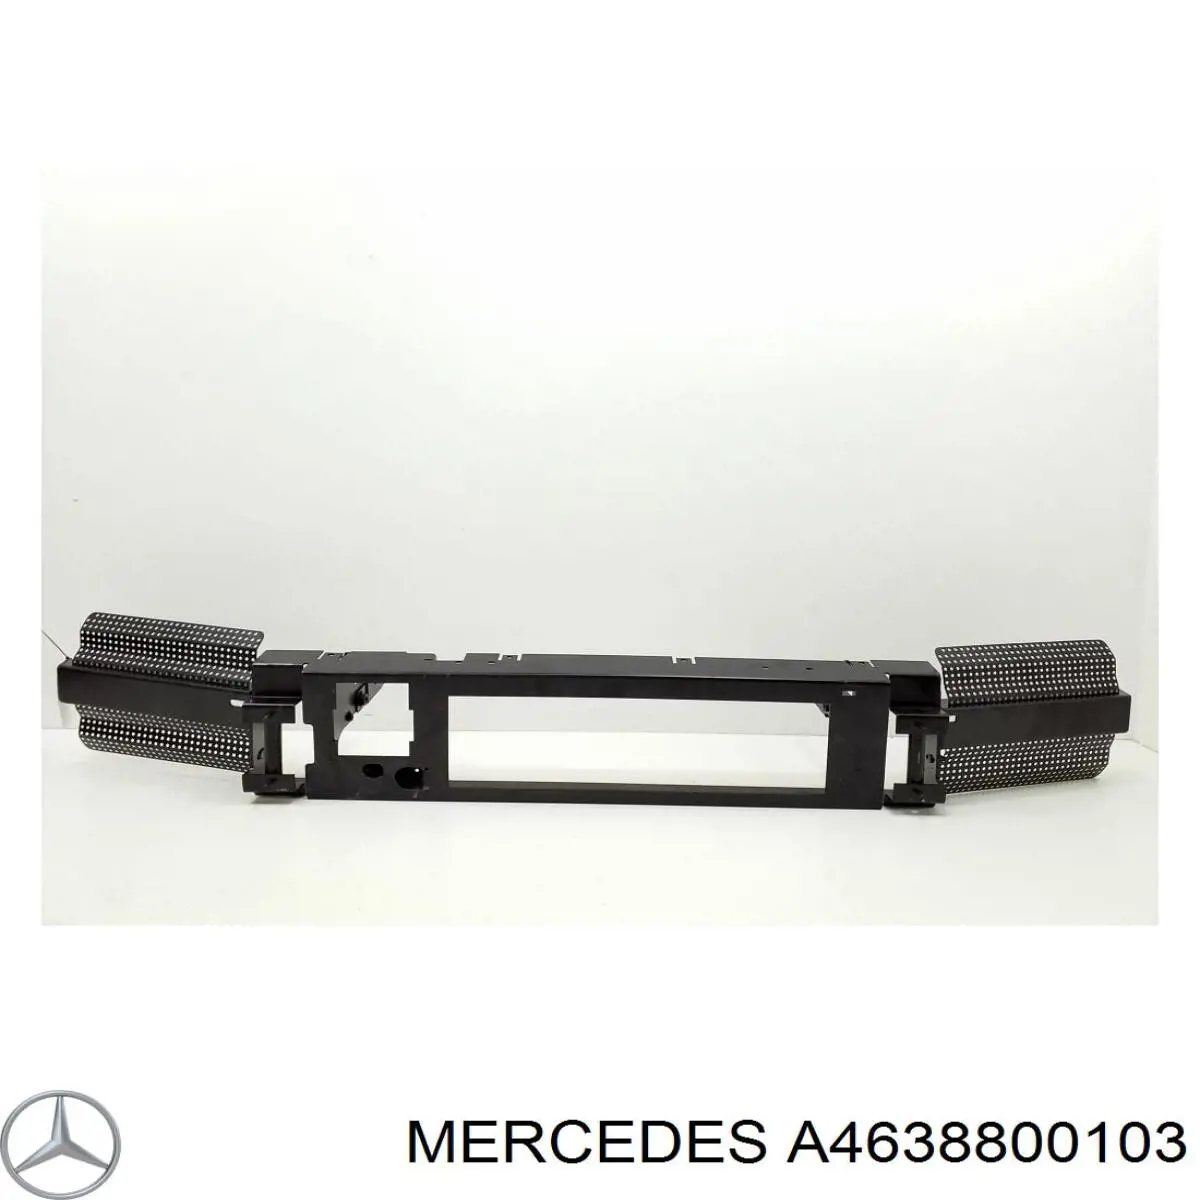 A4638800103 Mercedes